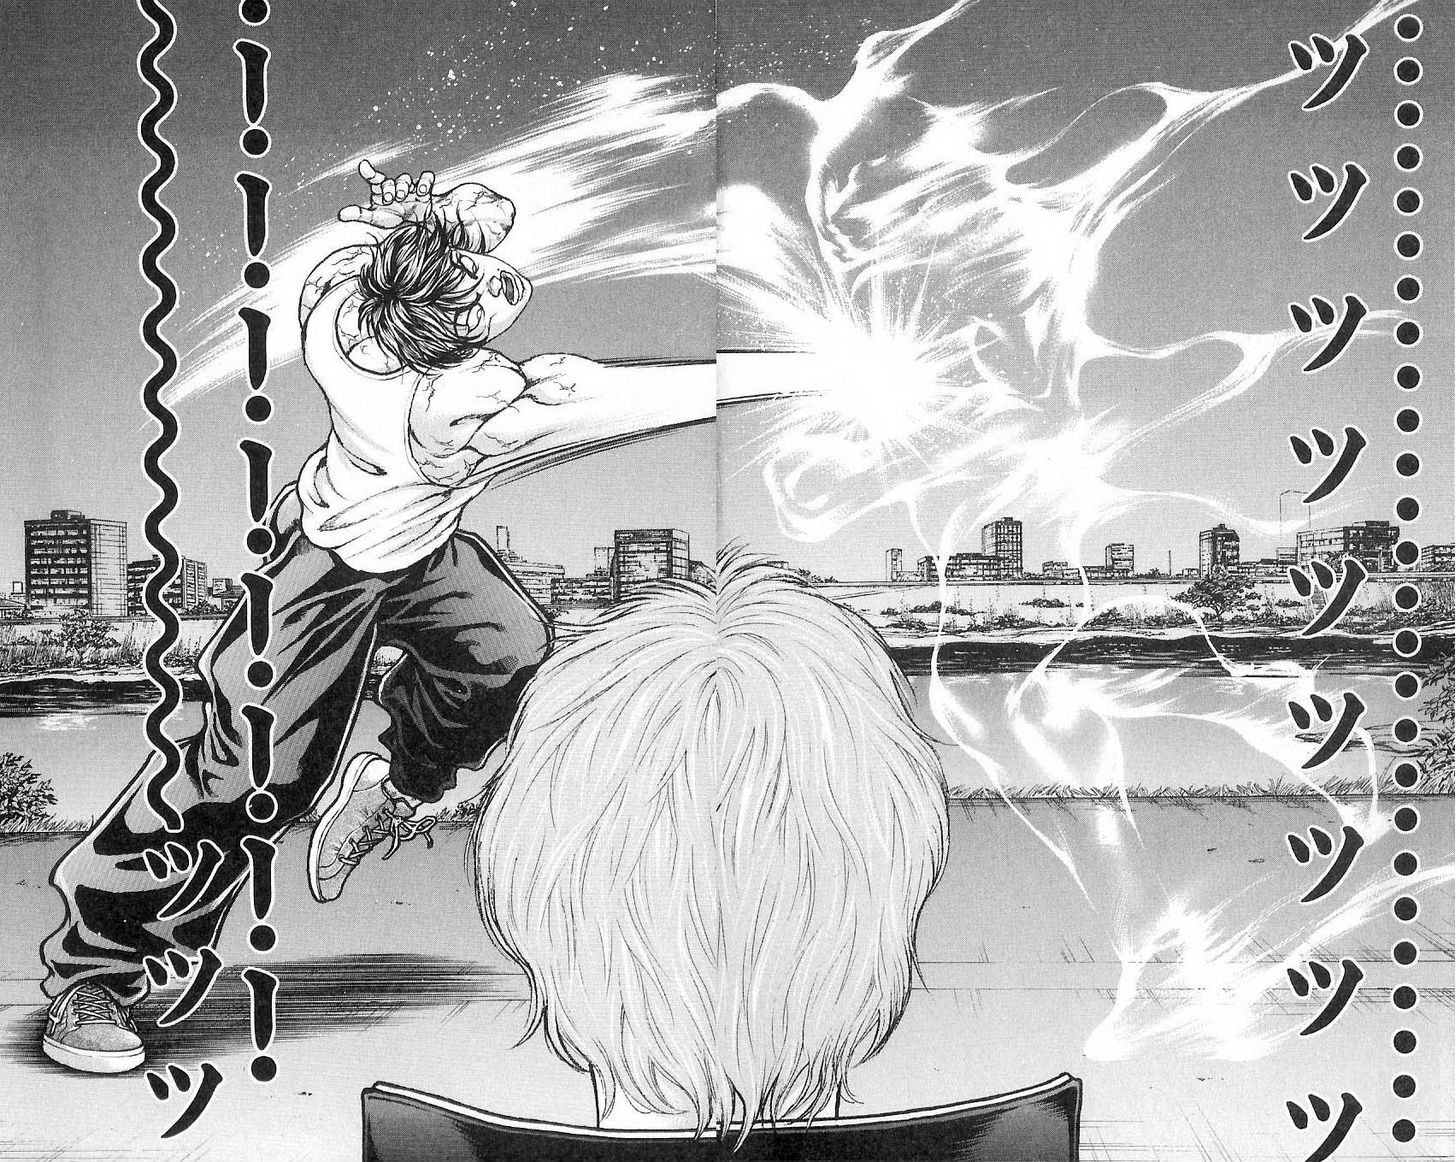 Read Baki Rahen Vol.1 Chapter 5: A Good Look on Mangakakalot